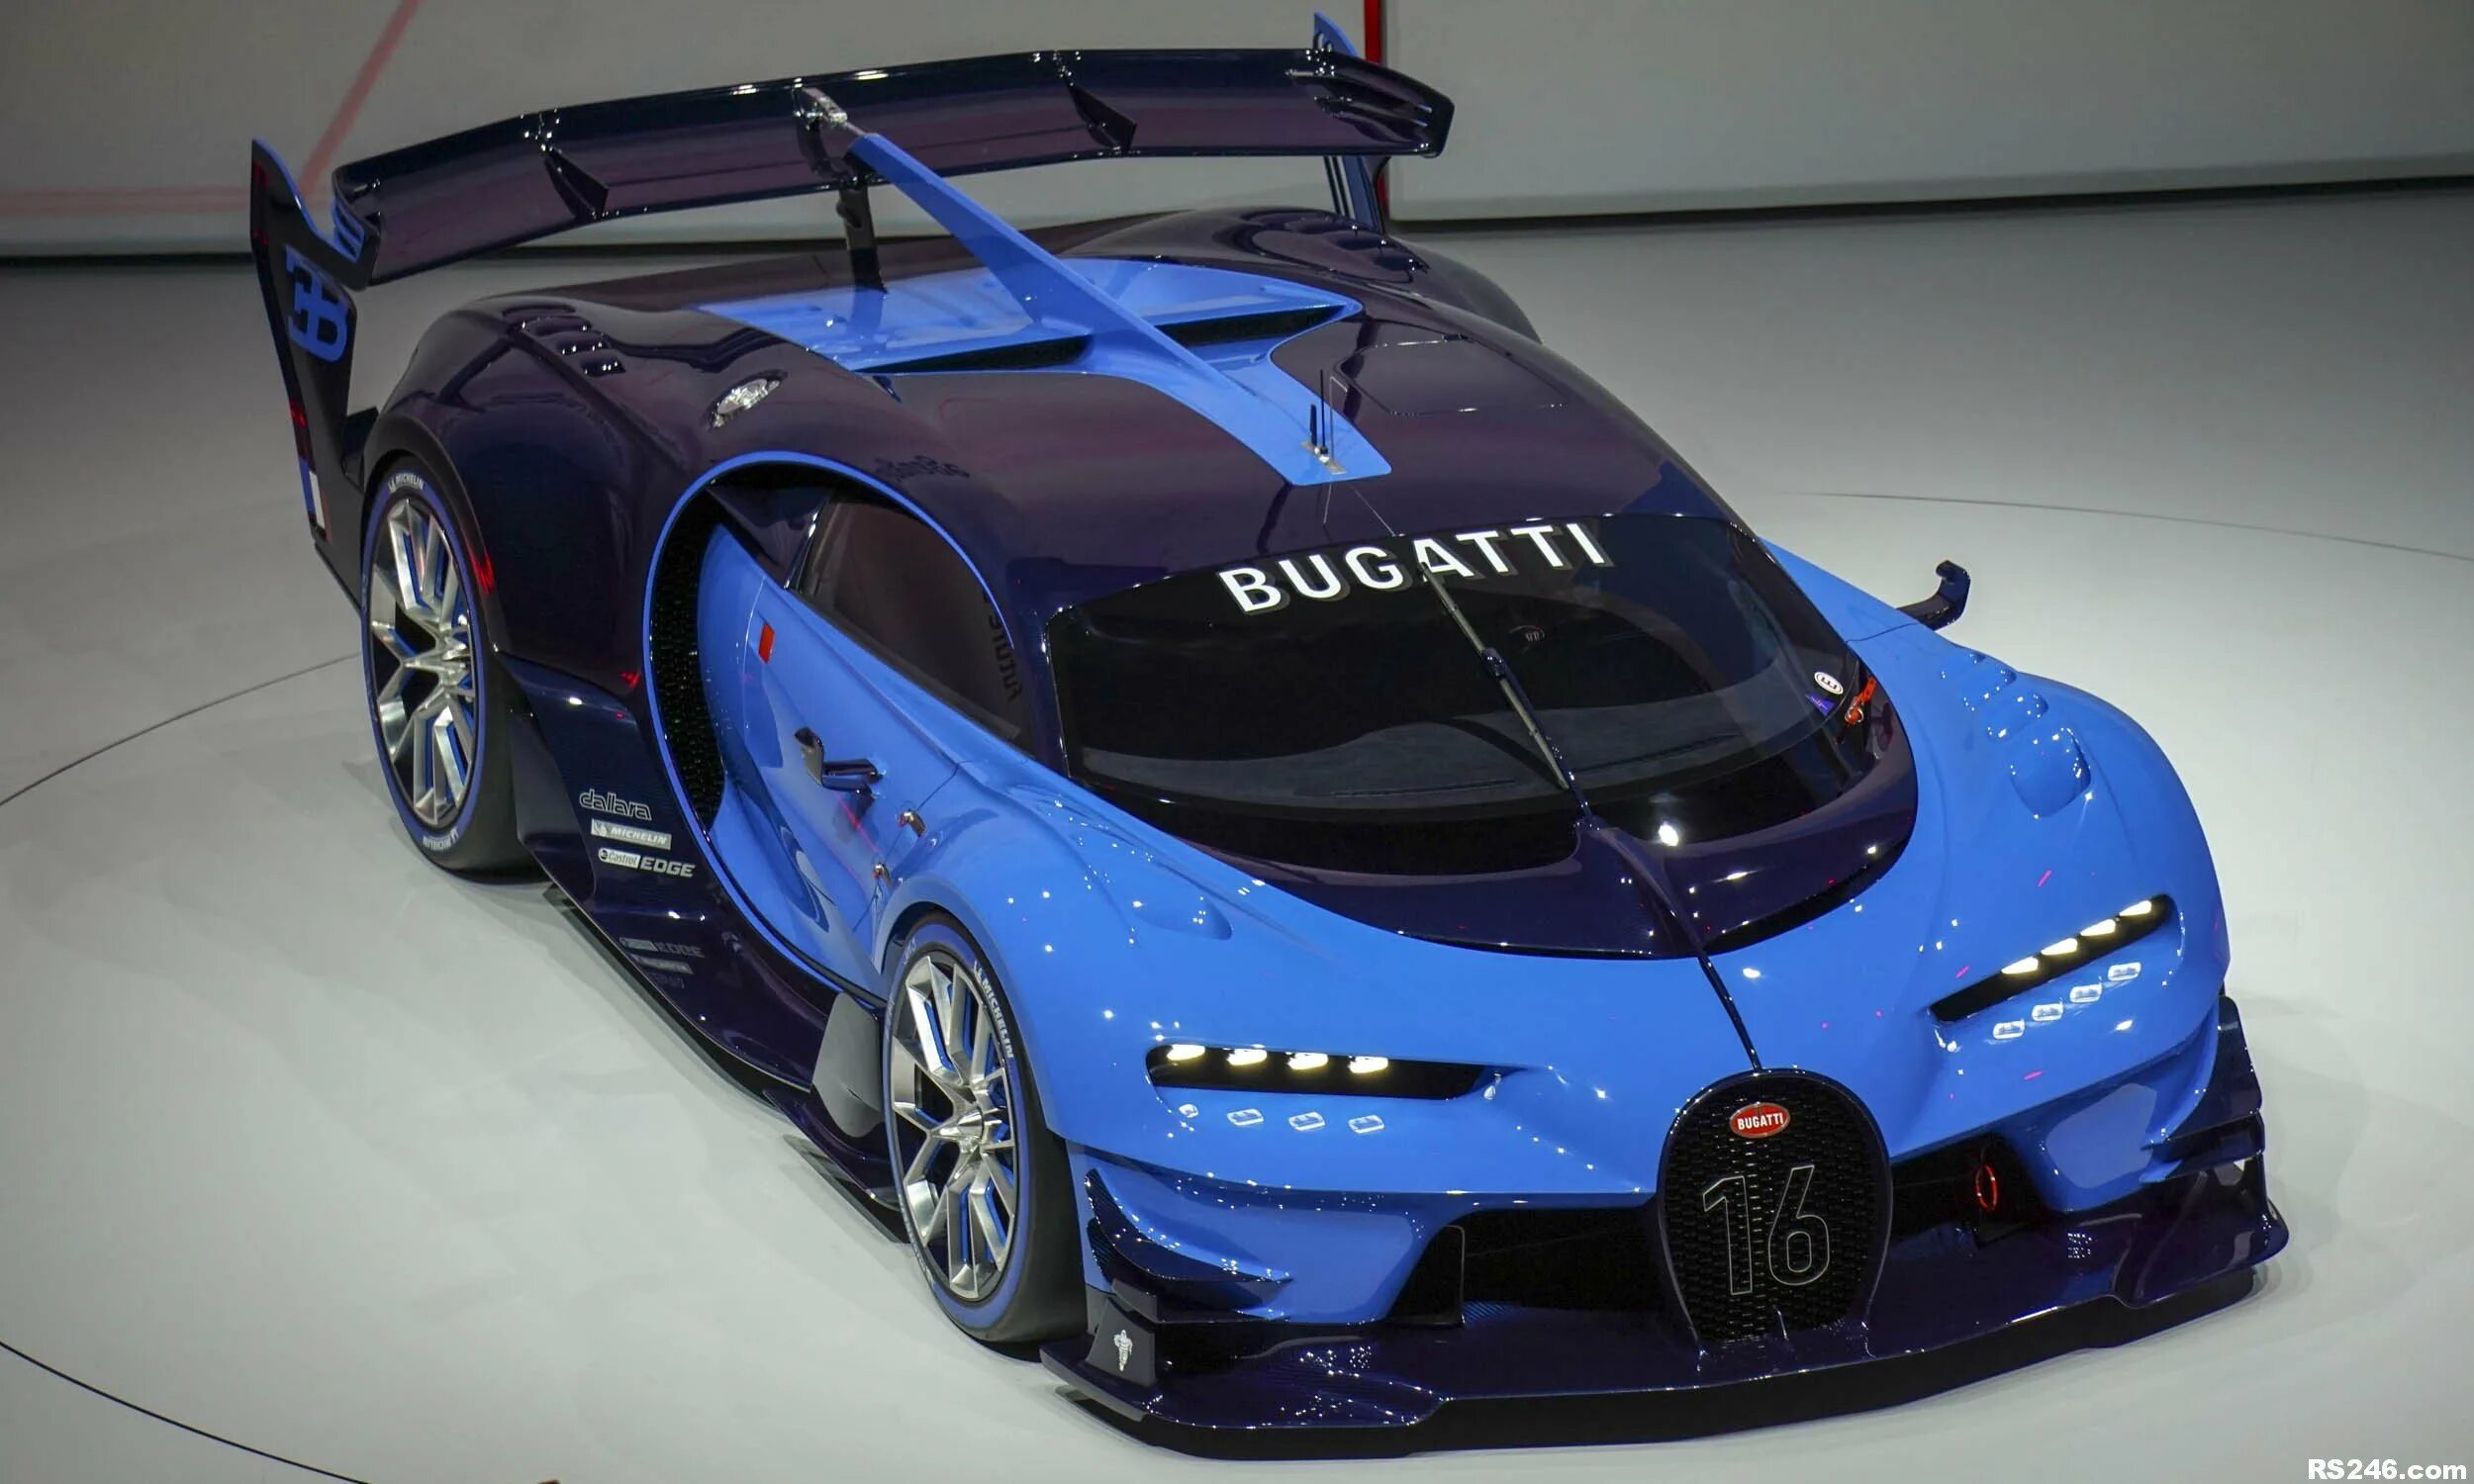 Самые крутые гоночные машины. Бугатти ВИЗИОН Гран Туризмо. Bugatti Vision Gran Turismo. Бугатти Вейрон Гранд Туризмо. Bugatti Vision Gran Turismo Concept 2016.